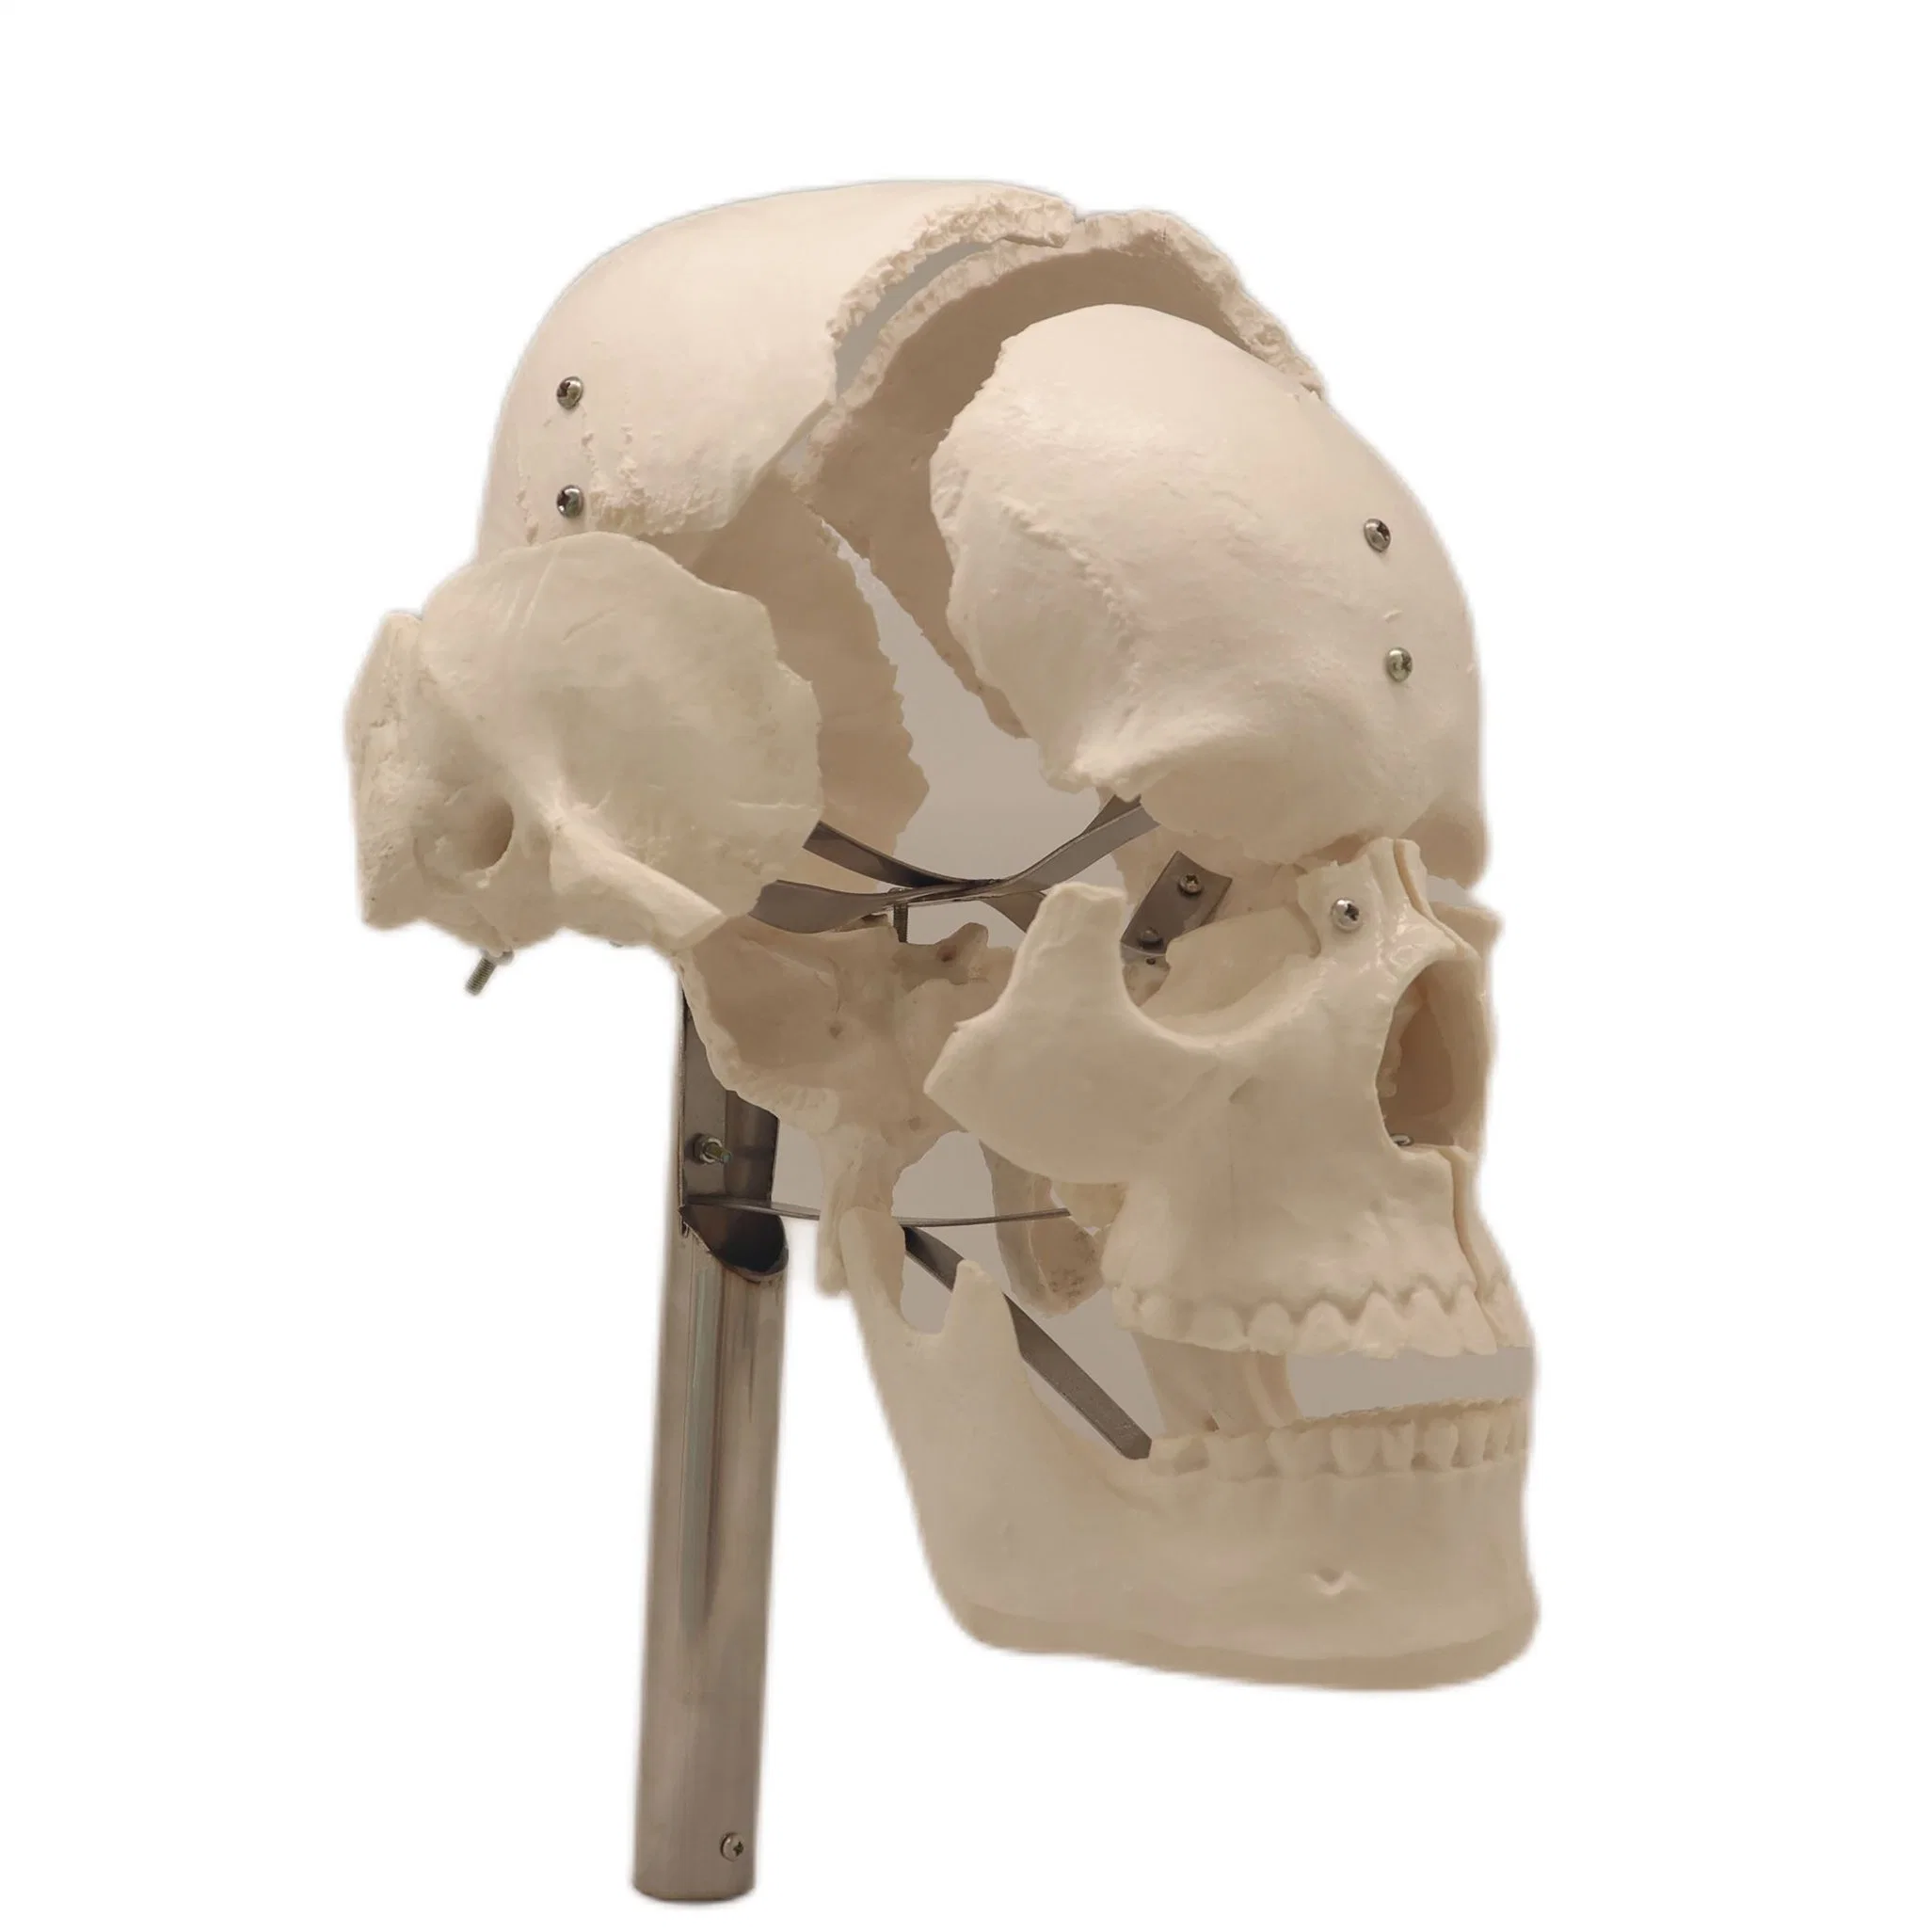 Modelos de Enseñanza médica Color óseo Modelo de esqueleto humano separado Cráneo humano de PVC